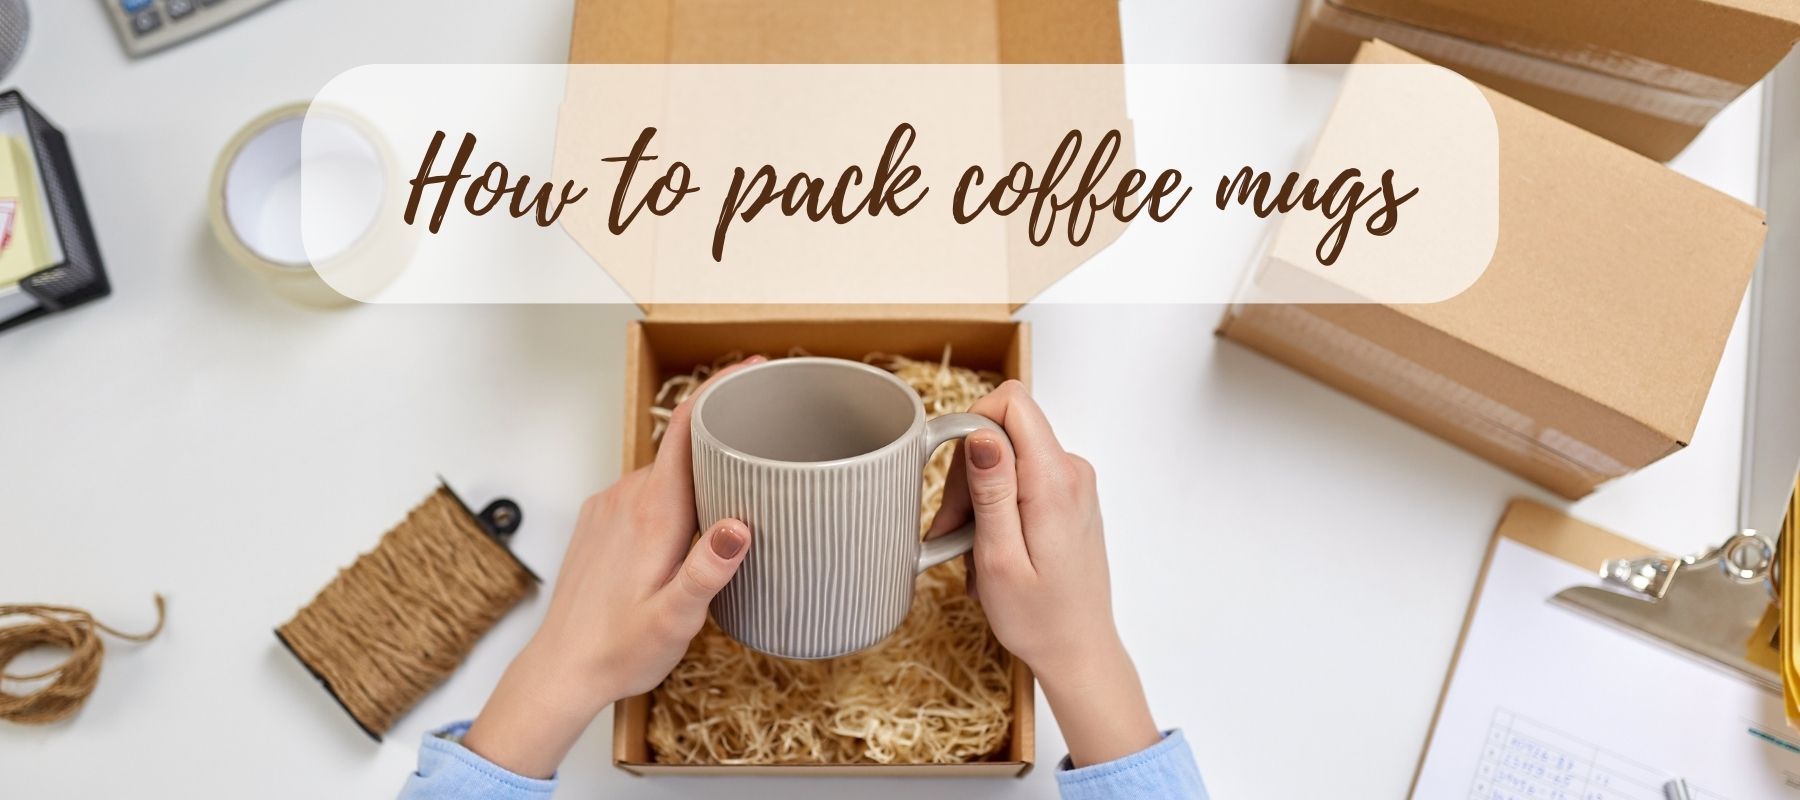 How-to-pack-coffee-mugs